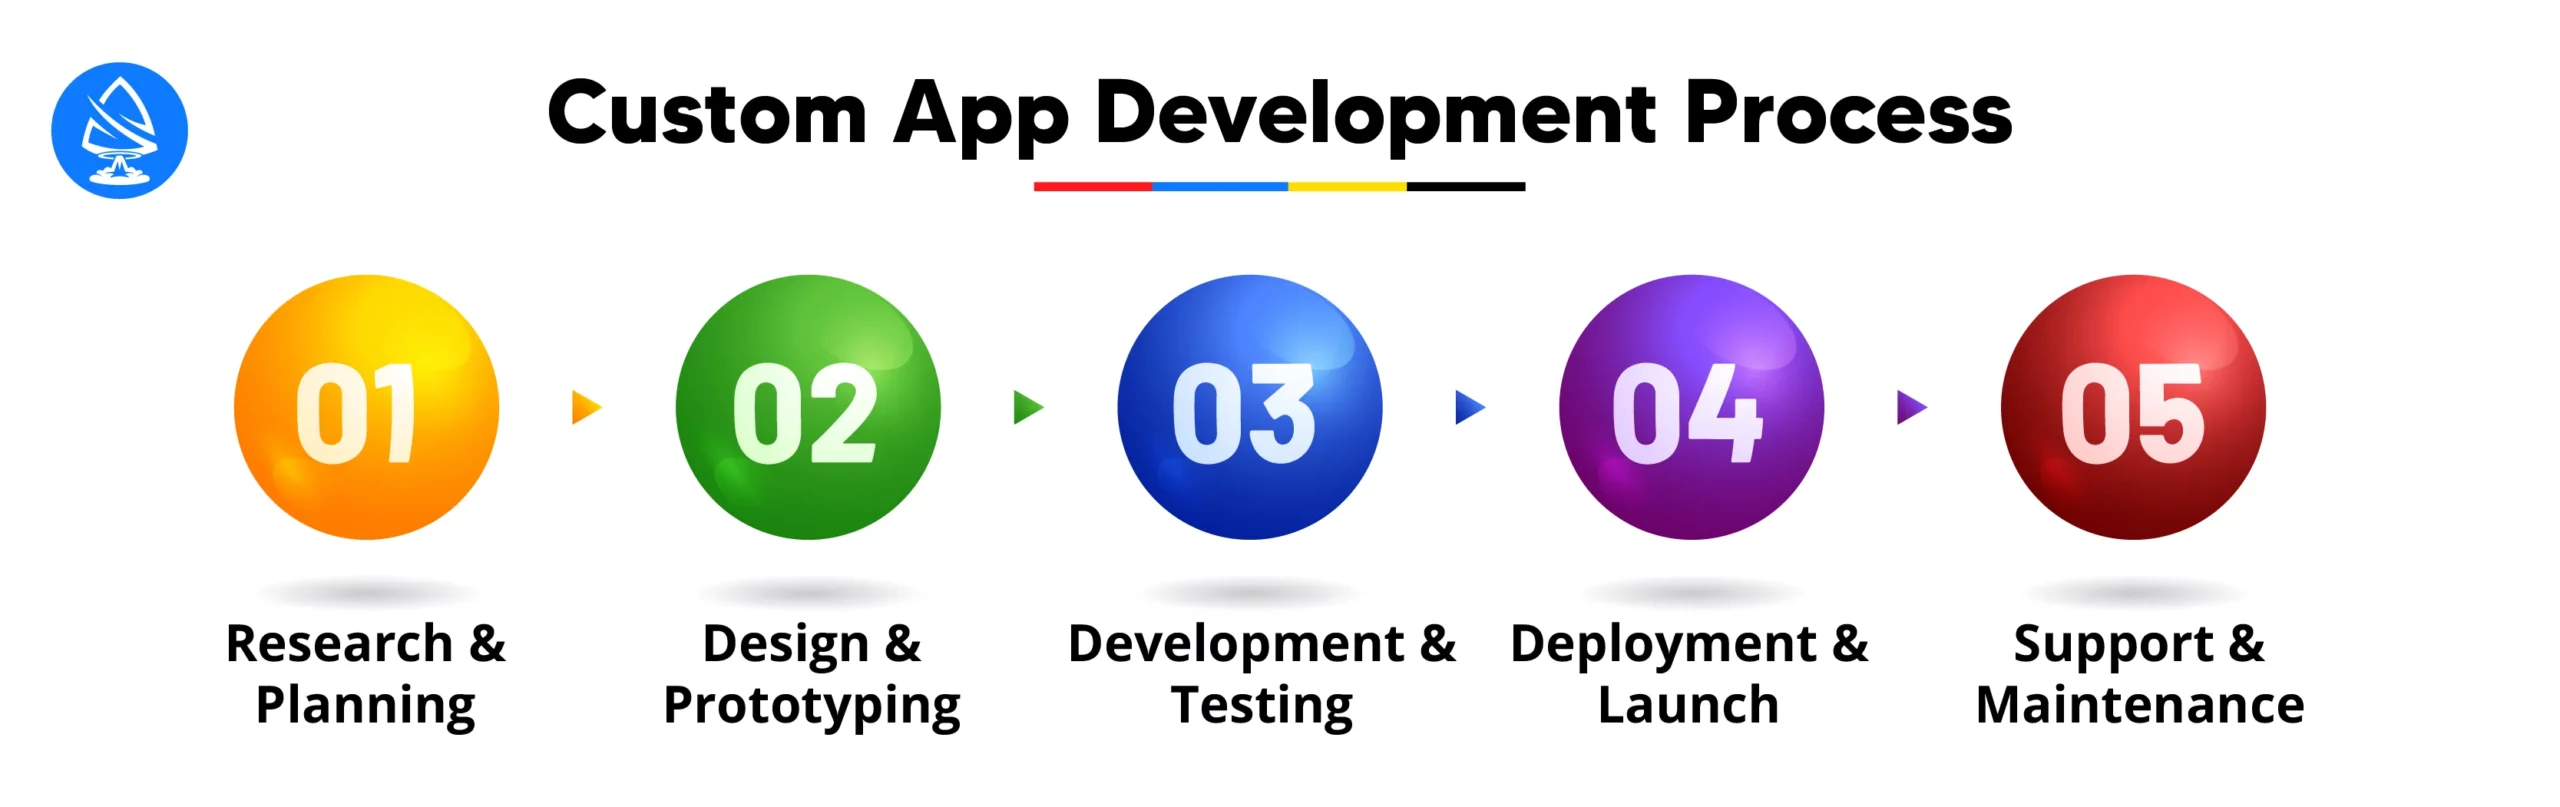 Custom App Development Process